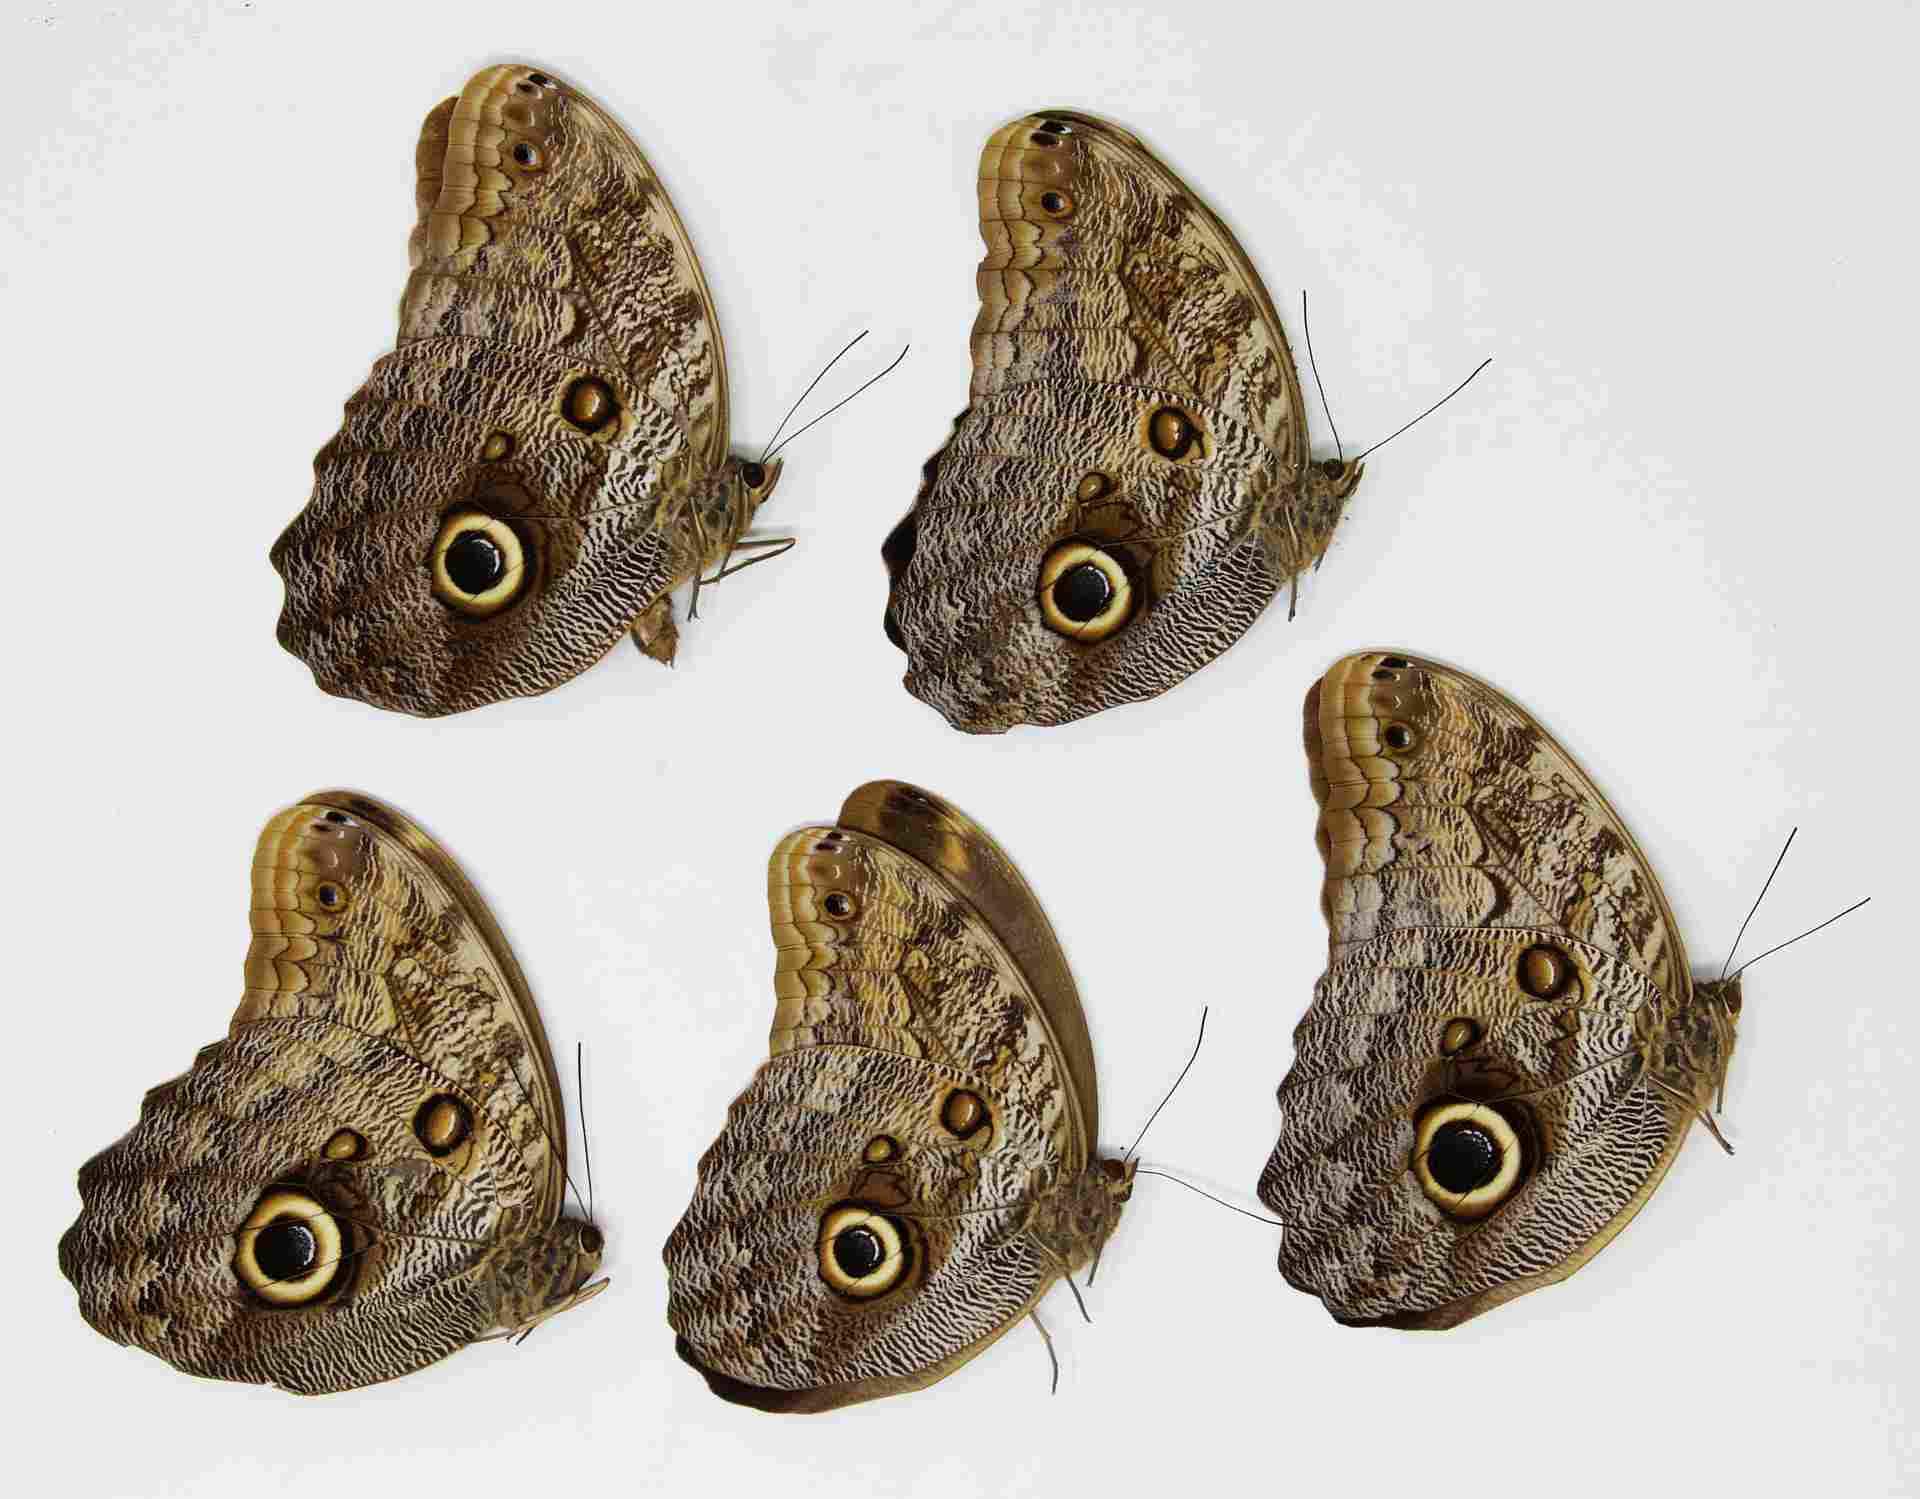 FIVE (5) Caligo eurilochus | Giant OWL butterflies | Dry-preserved specimens